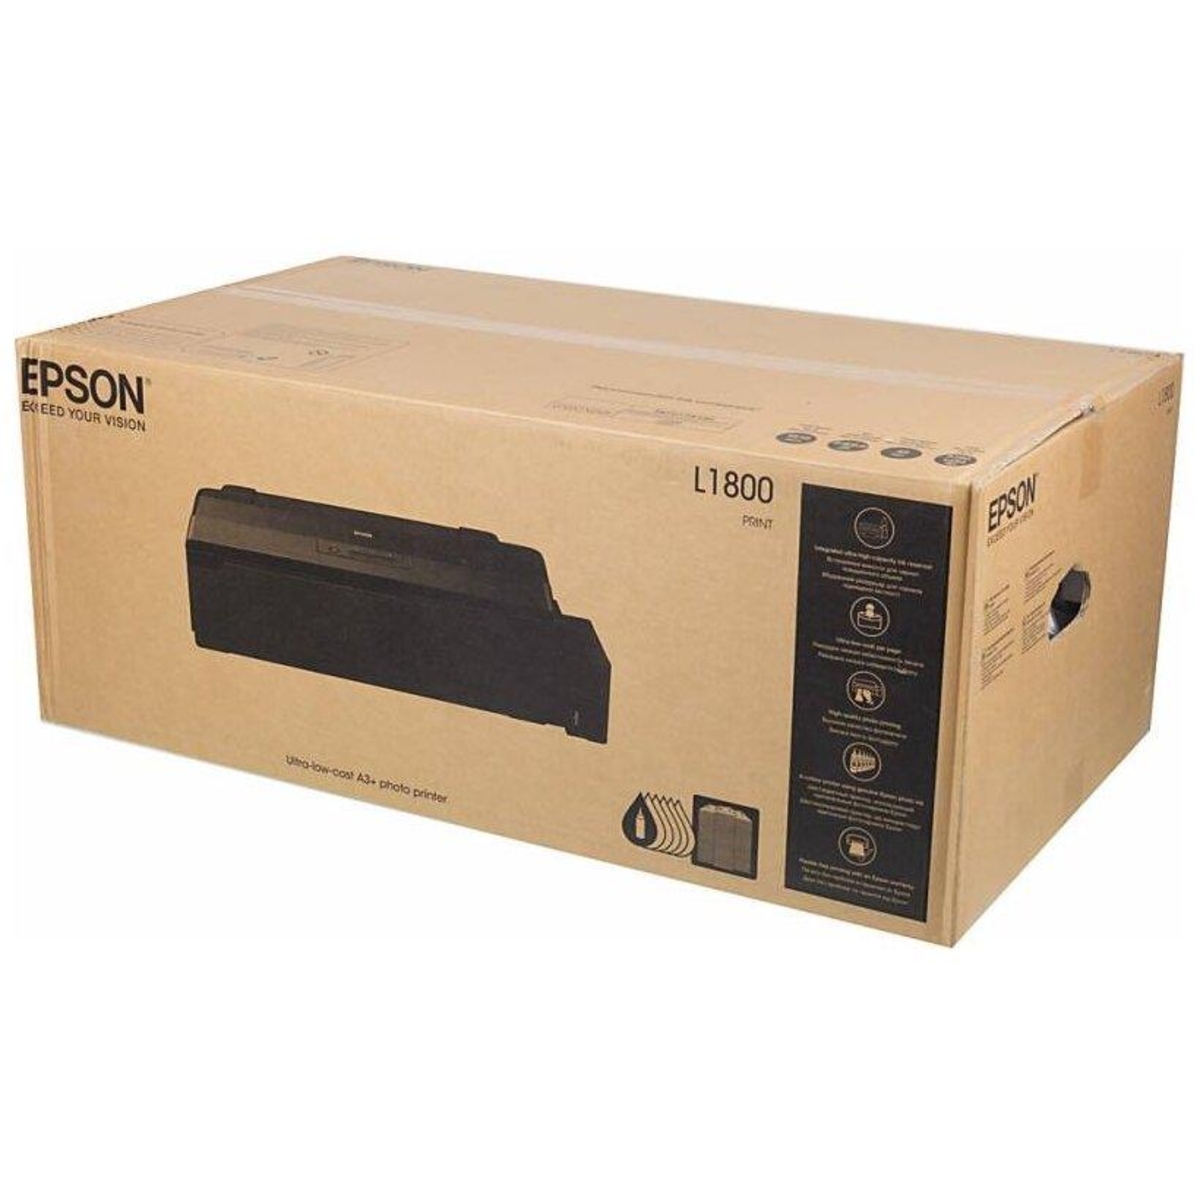 X 1800 l. Принтер Epson l1800. Принтер Эпсон 1800. Epson l1800 (a3+, 15 стр / мин, 5760x1440 dpi, 6 красок, USB2.0). Принтер струйный Epson l1800, цветной..